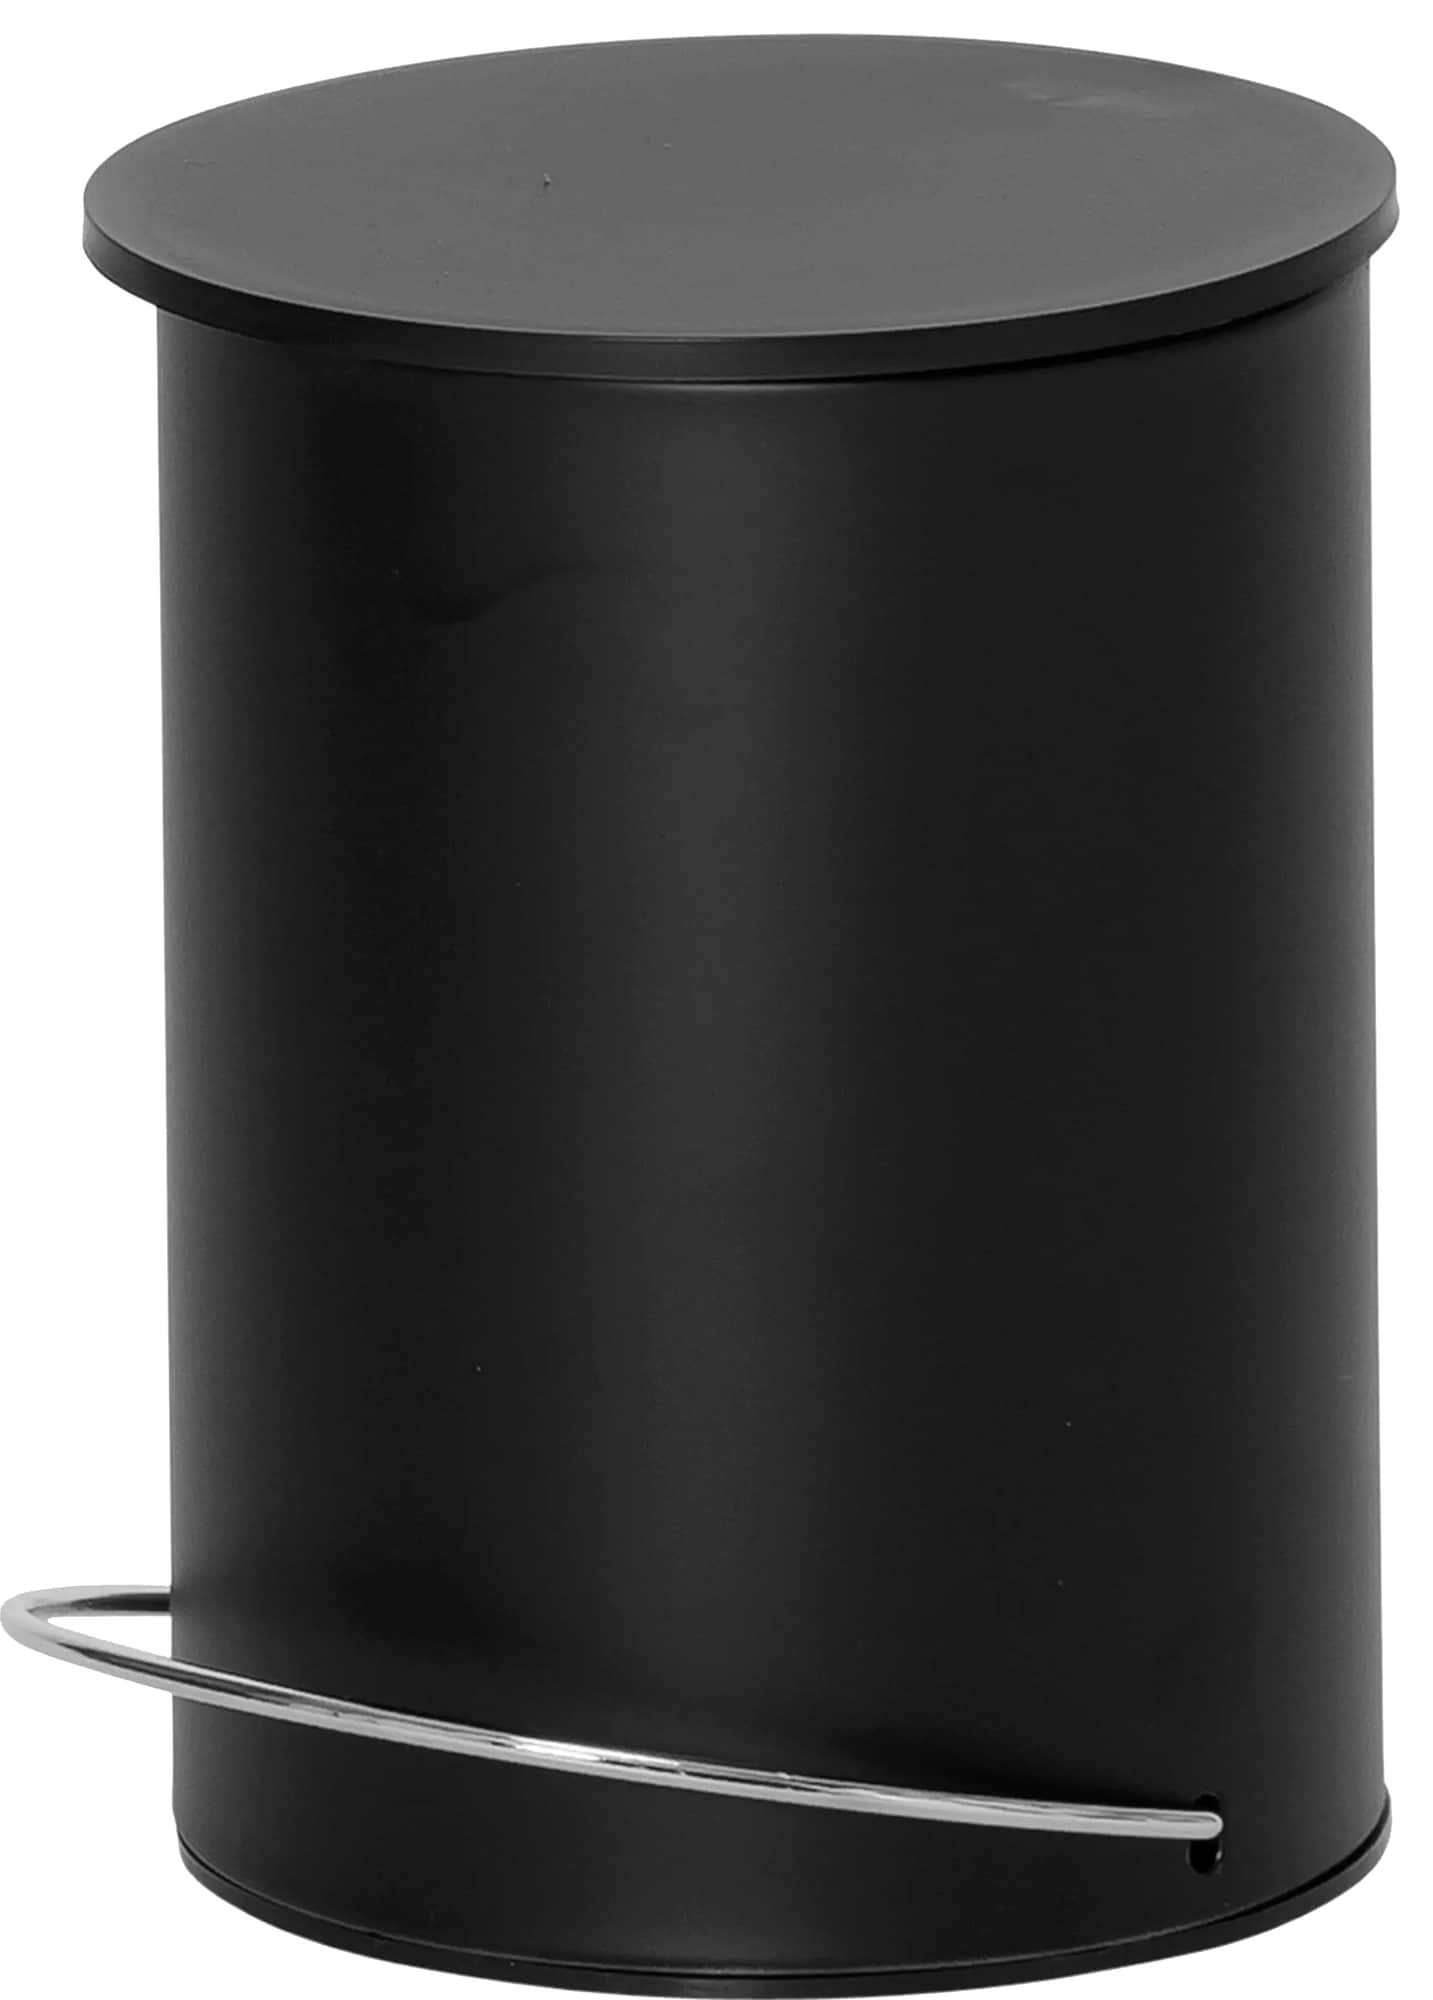 Edward soptunna med pedal 3 l (svart) - Elgiganten